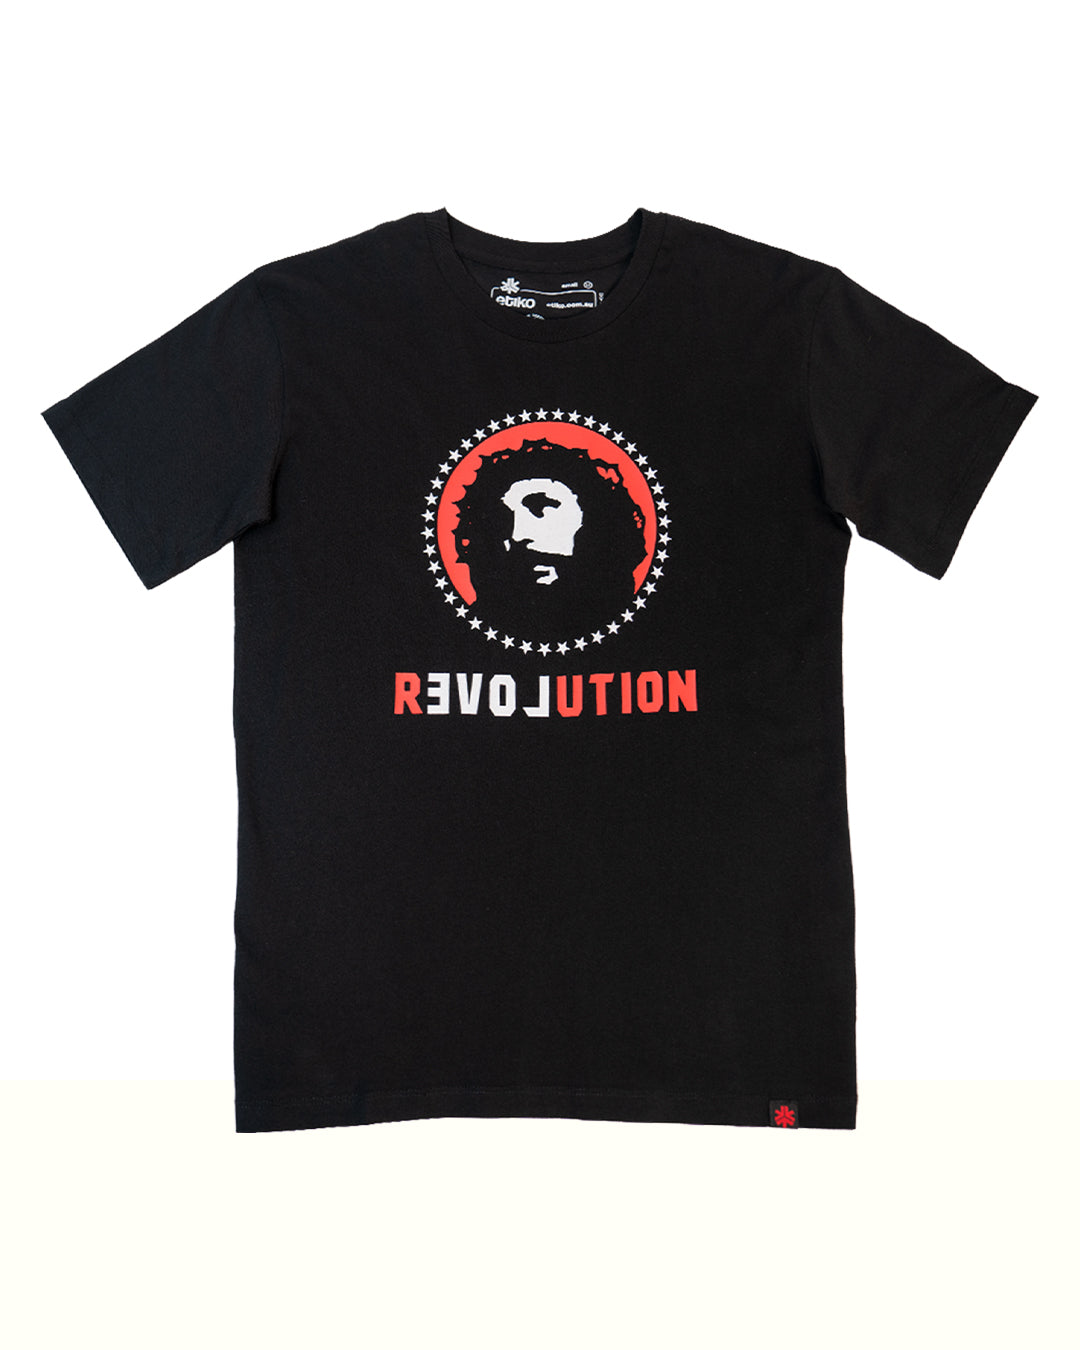 Etiko Fairtrade Certified Organic Cotton Love Revolution Printed Black Unisex T-Shirt